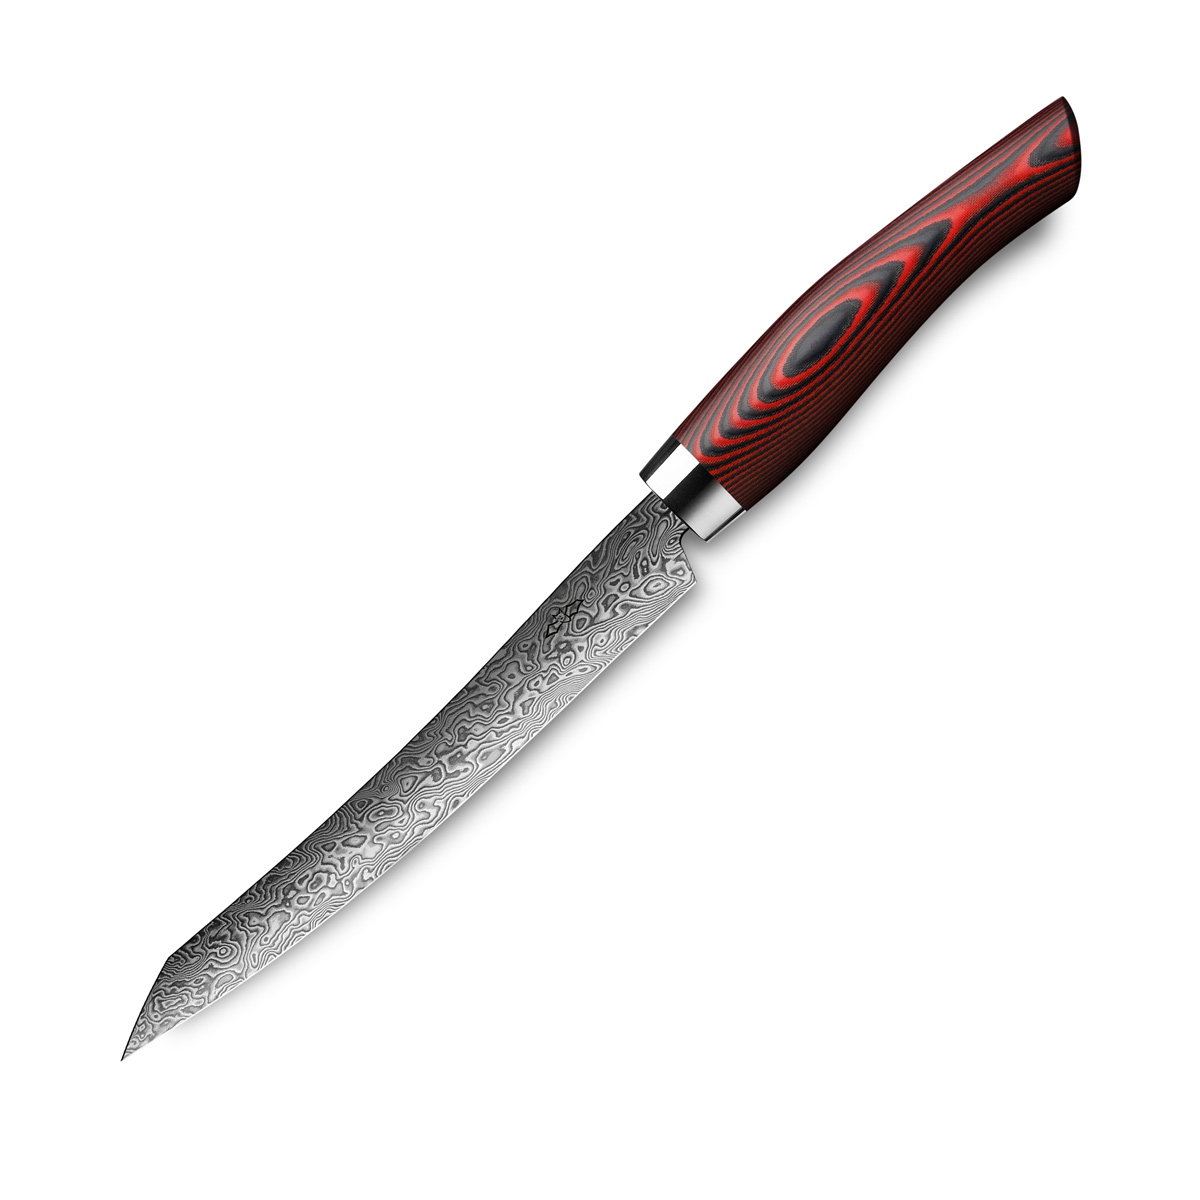 Nesmuk Exklusiv C 90 Damast Slicer 16 cm - Griff Micarta rot